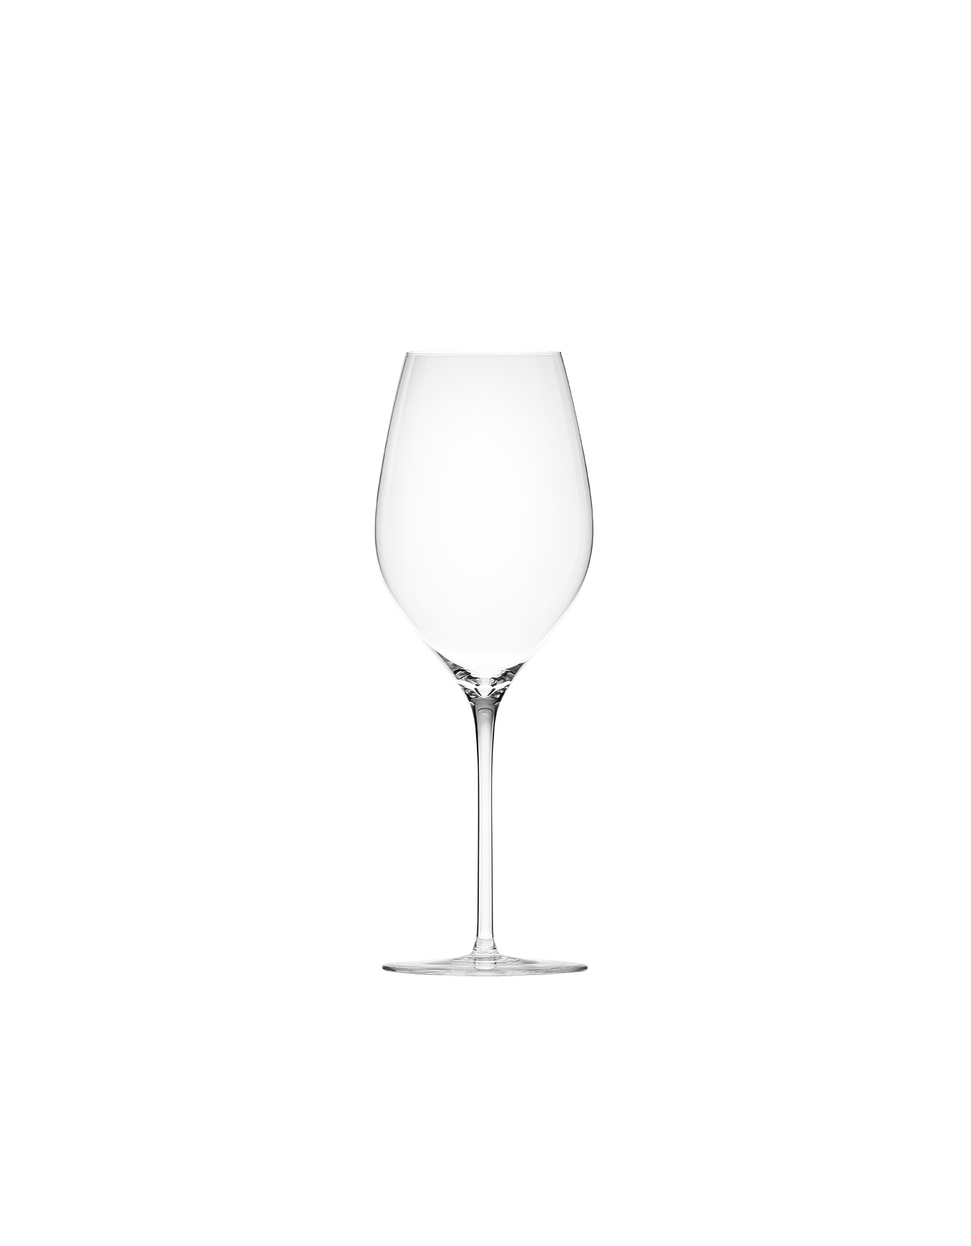 Oeno wine glass, 350 ml